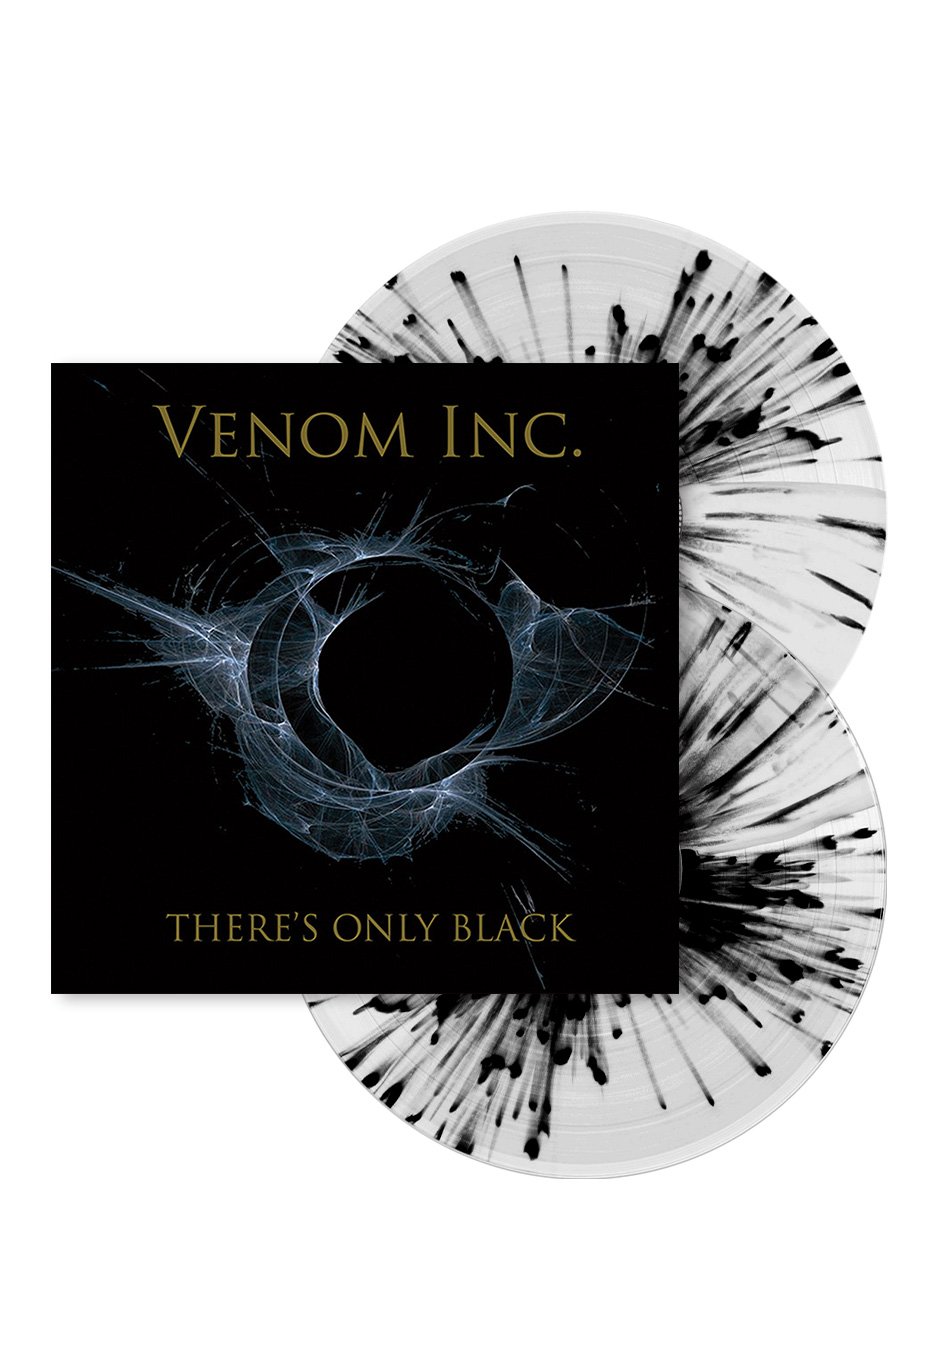 Venom Inc. - There's Only Black Ltd. Clear/Black - Splattered 2 Vinyl